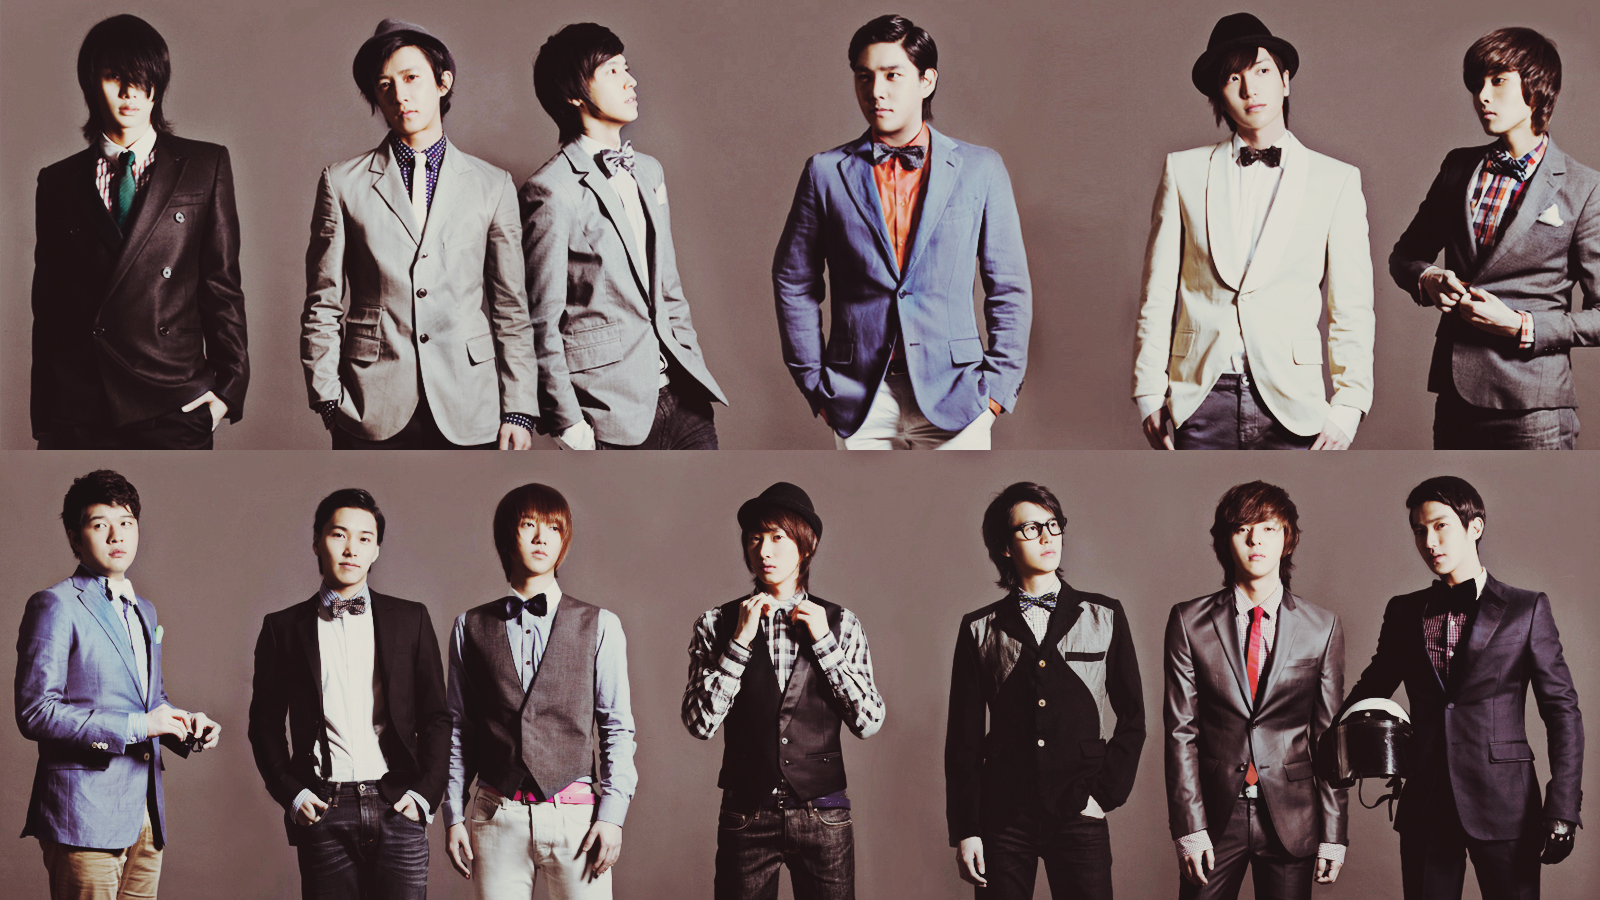 Super Junior Image HD Wallpaper And